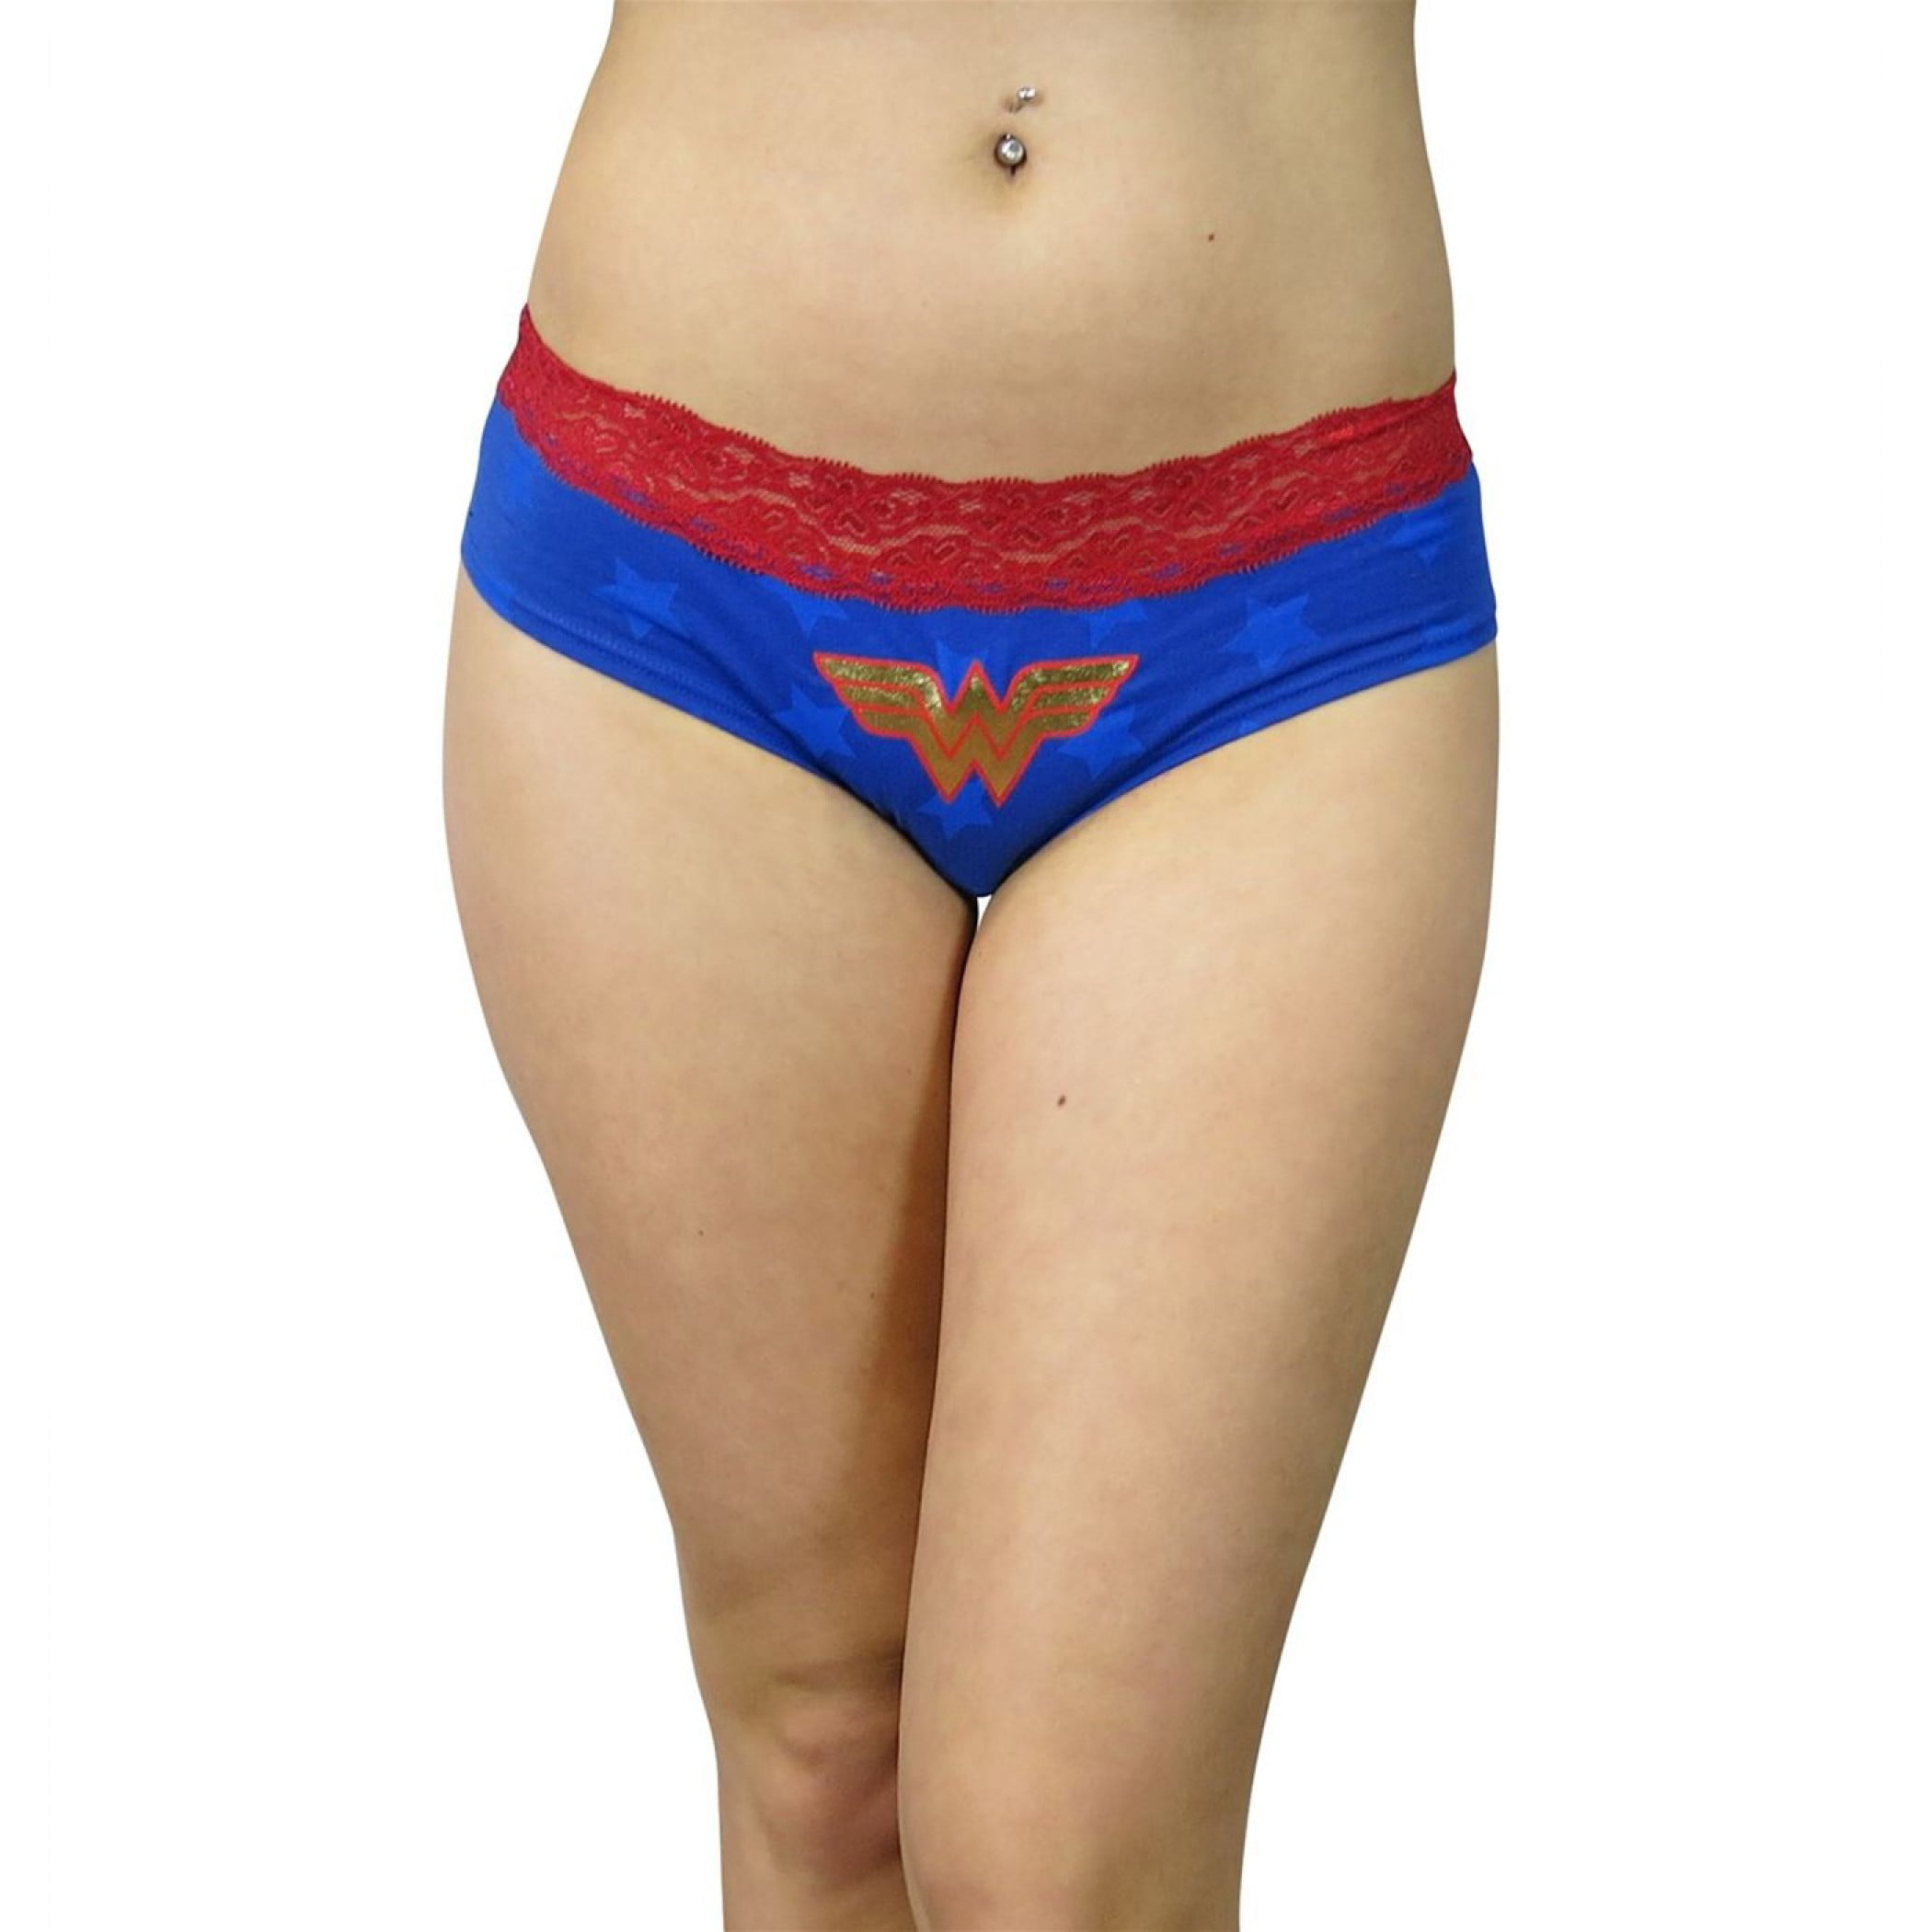 TORRID : Wonder Woman Star Print Foil Hipster Panty